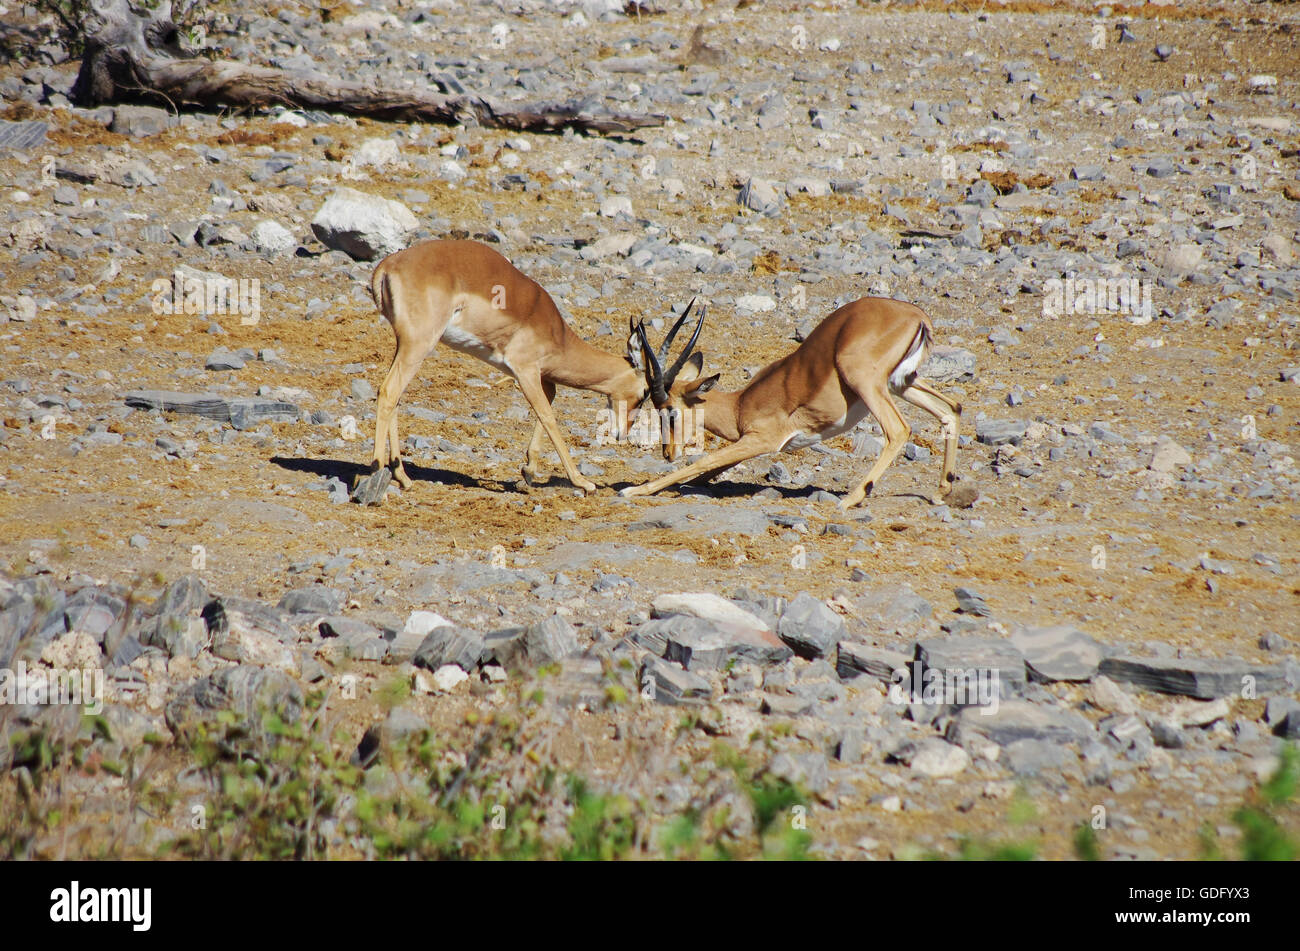 Gazelles fighting Stock Photo